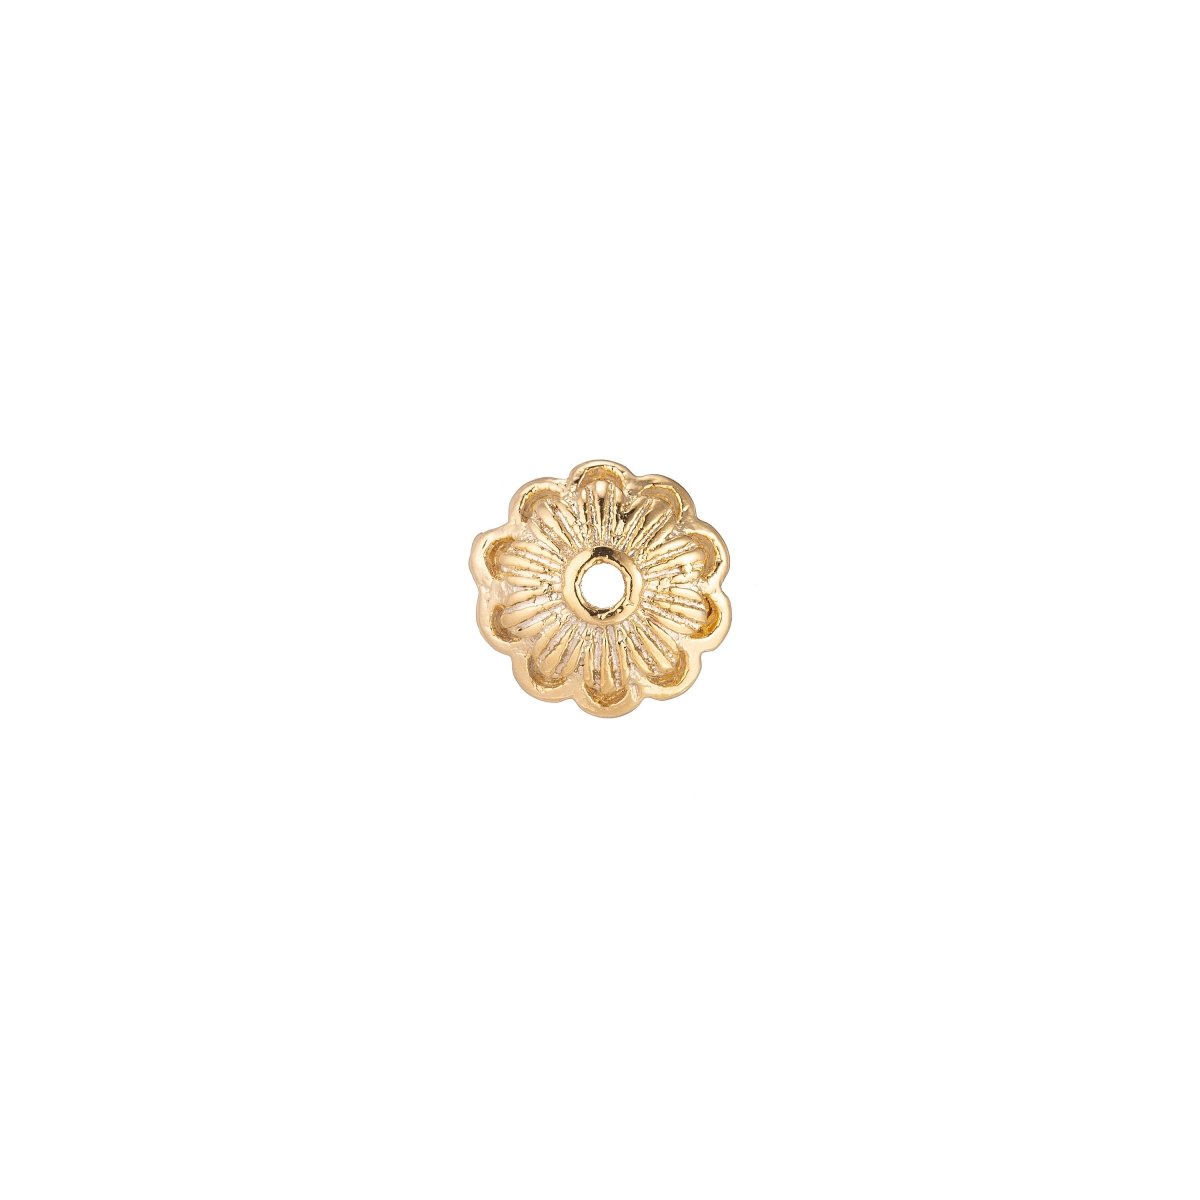 8mm Gold Filled Flower Bead Caps 2 pieces GF Bead Caps Decorative Bead Cap, CL-K061 - DLUXCA